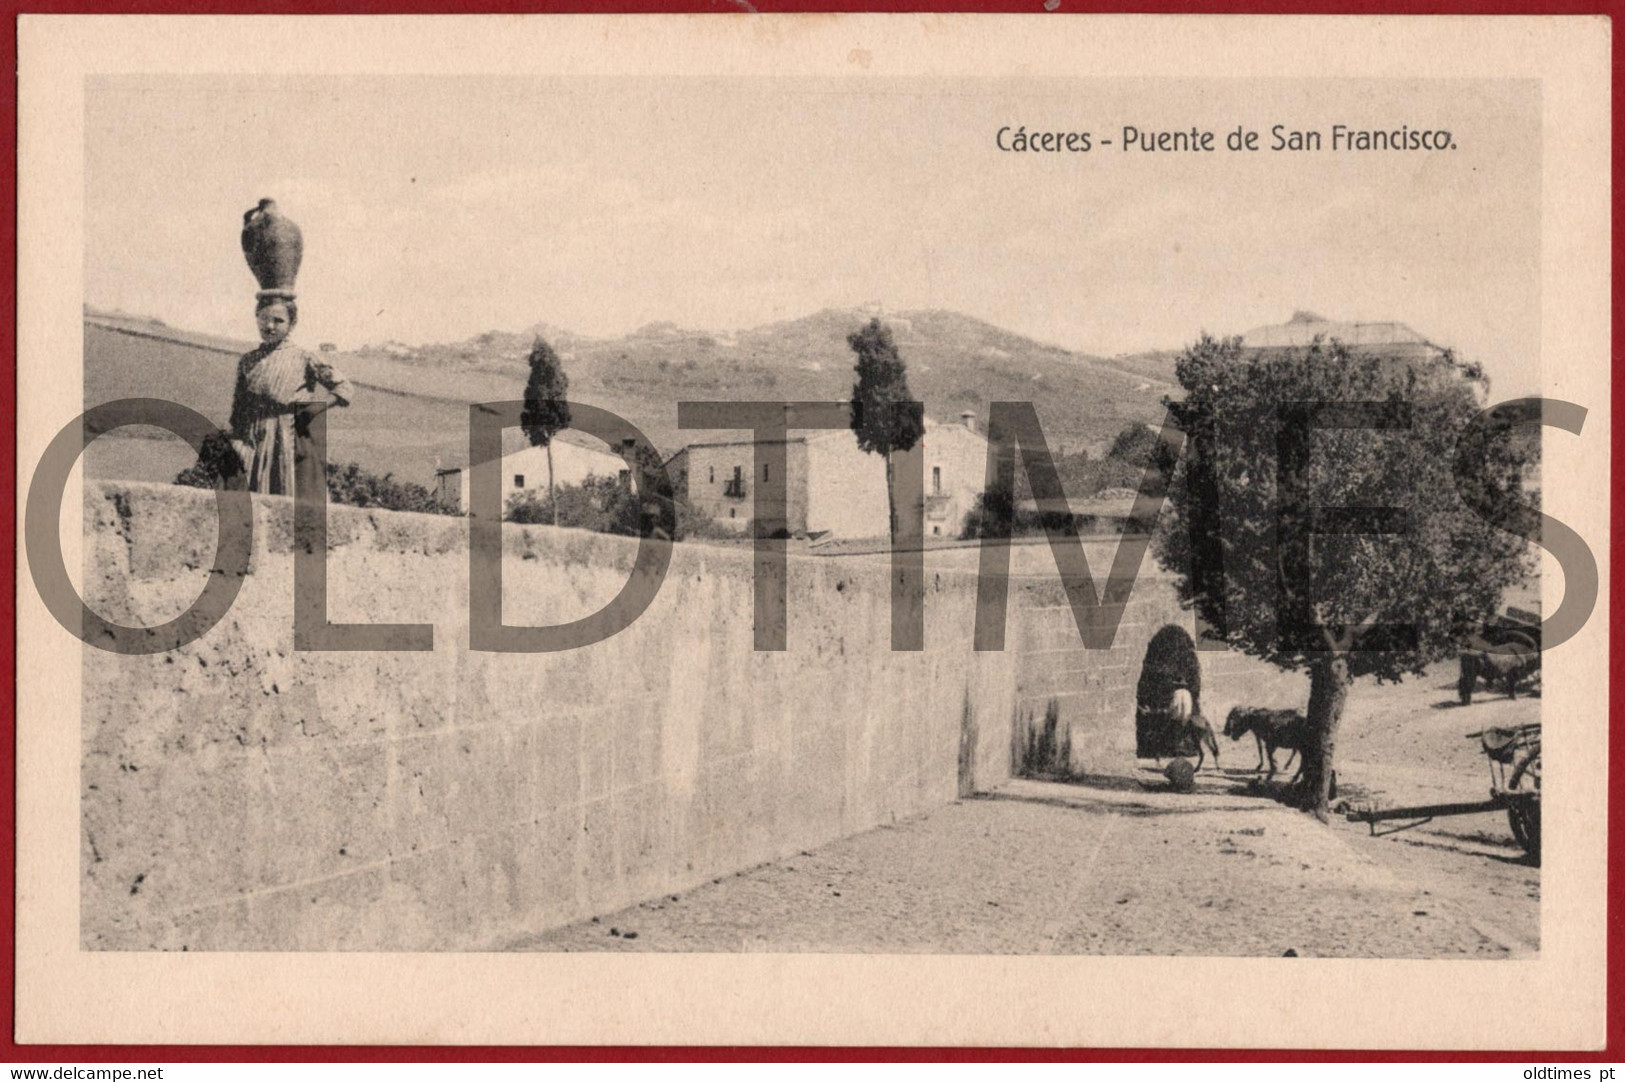 ESPANA - CACERES - PUENTE DE SAN FRANCISCO - 1920 PC - Cáceres